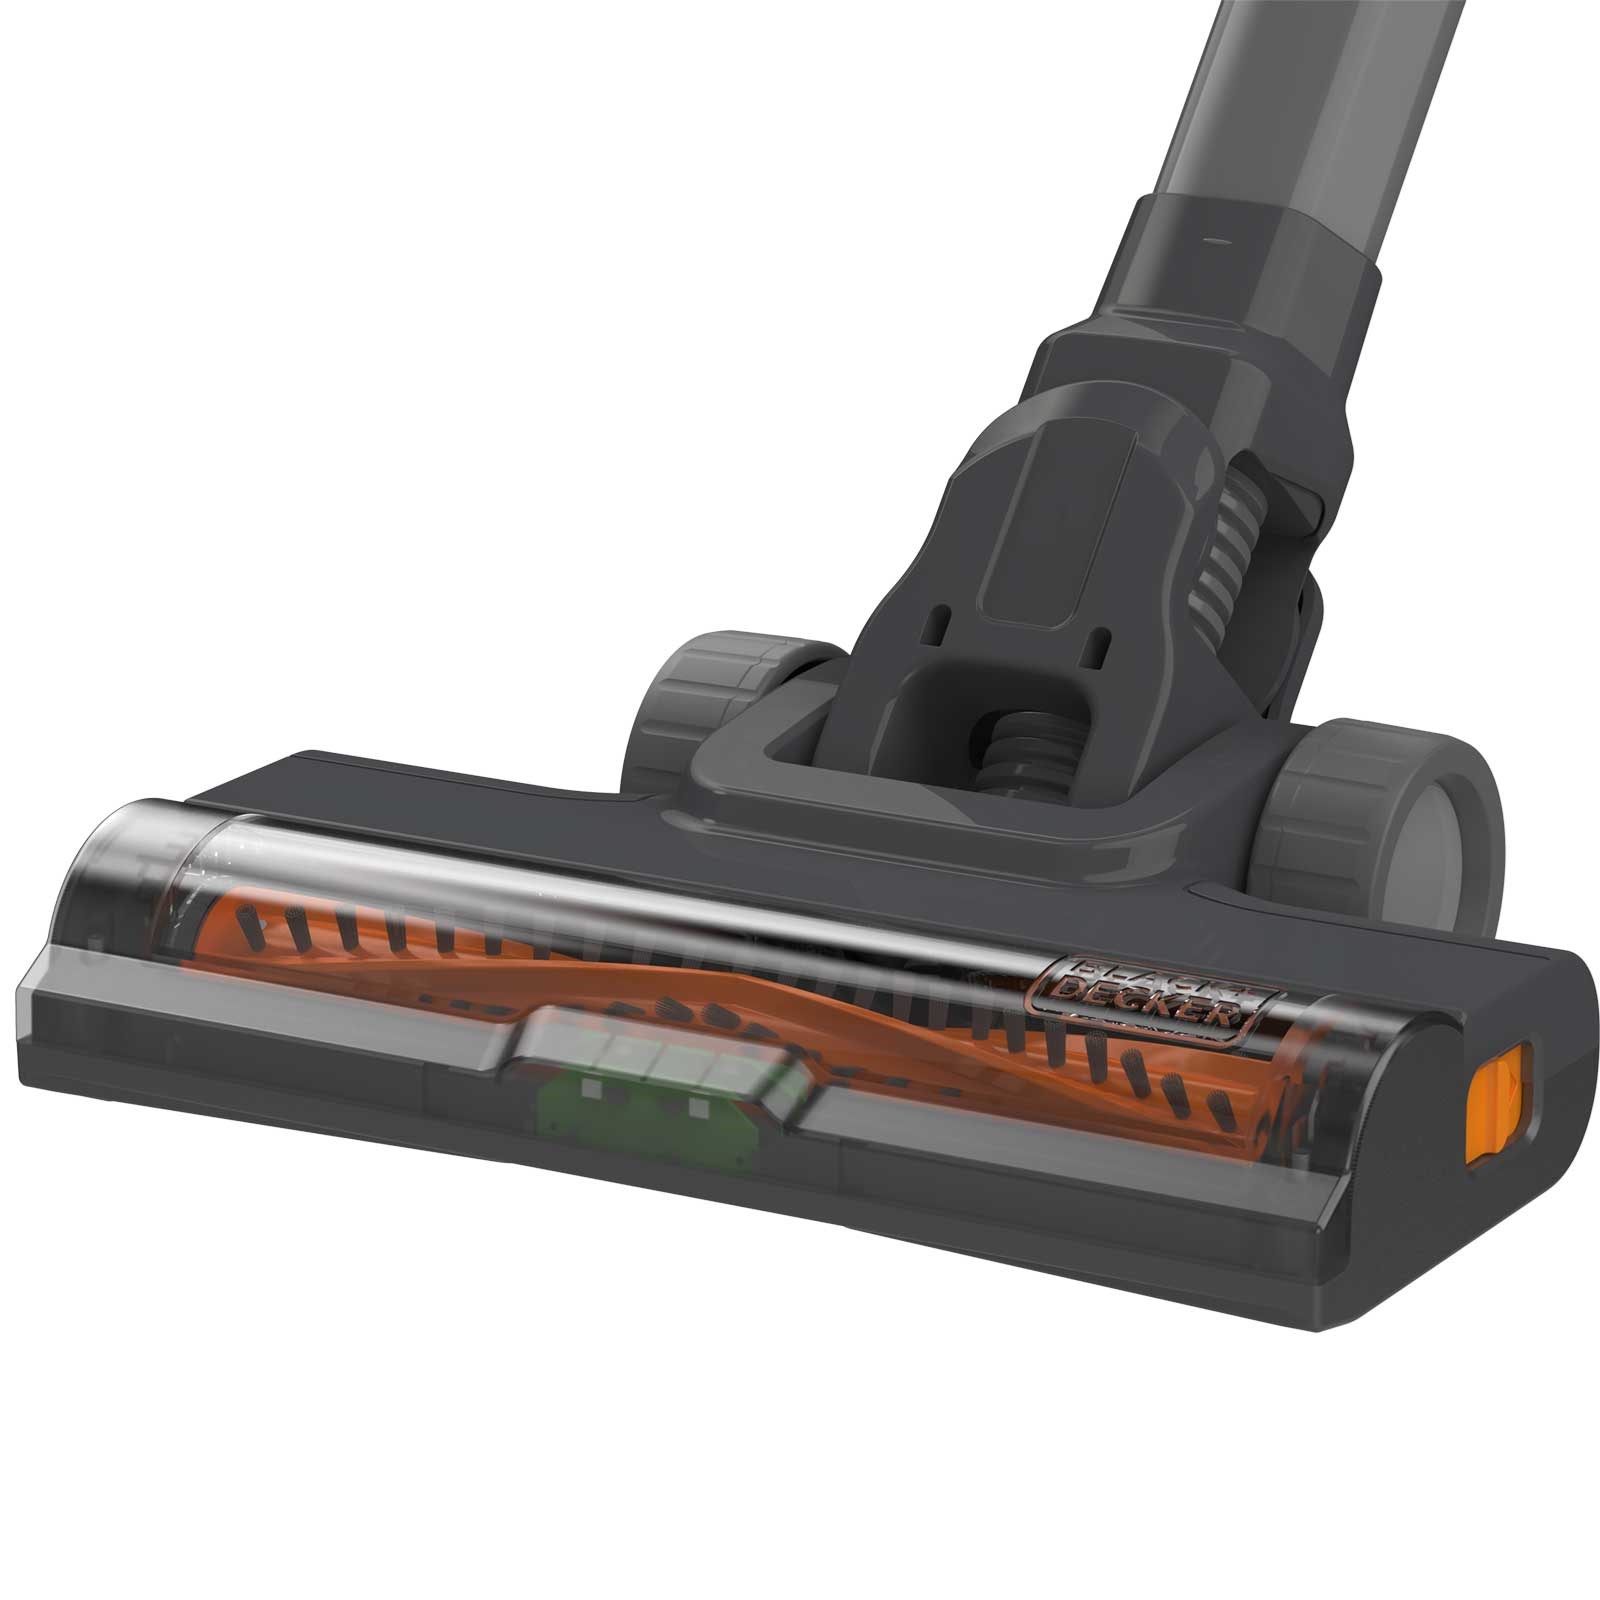 https://www.tooled-up.com/artwork/produsage/BD-BHFEA520J-GB-A3-Black-Decker-18v-Cordless-Powerseries-Stick-Vacuum-Cleaner-Floor-Tool.jpg?w=1600&h=1600